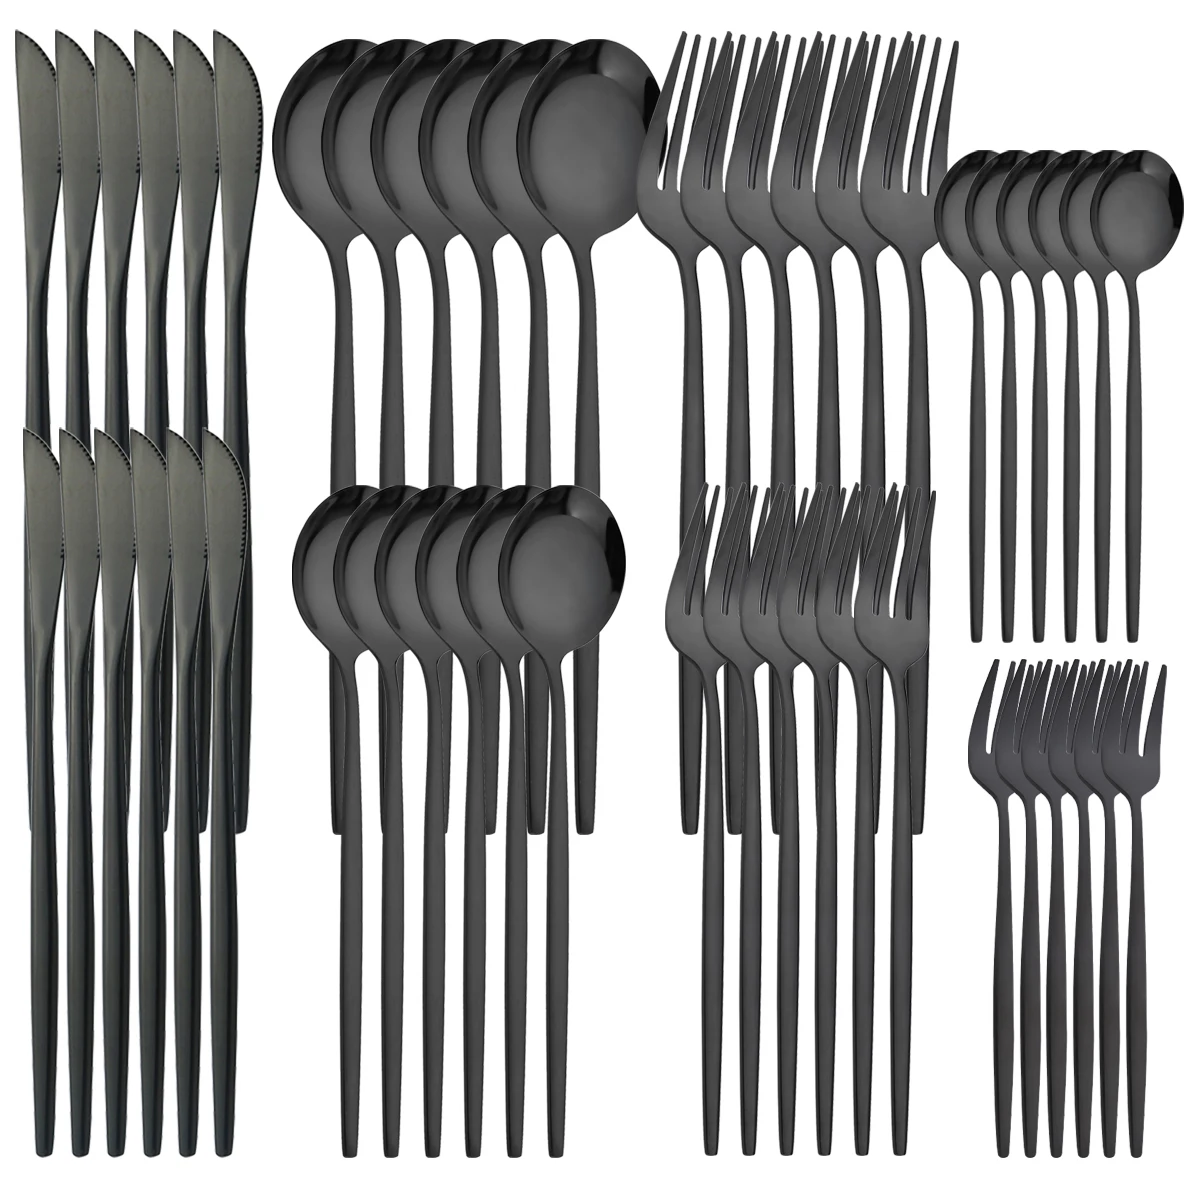 

48pcs/set Black Cutlery Set Dessert Knife Fork Teaspoon Dinnerware Stainless Steel Tableware Flatware Western Kitchen Silverware